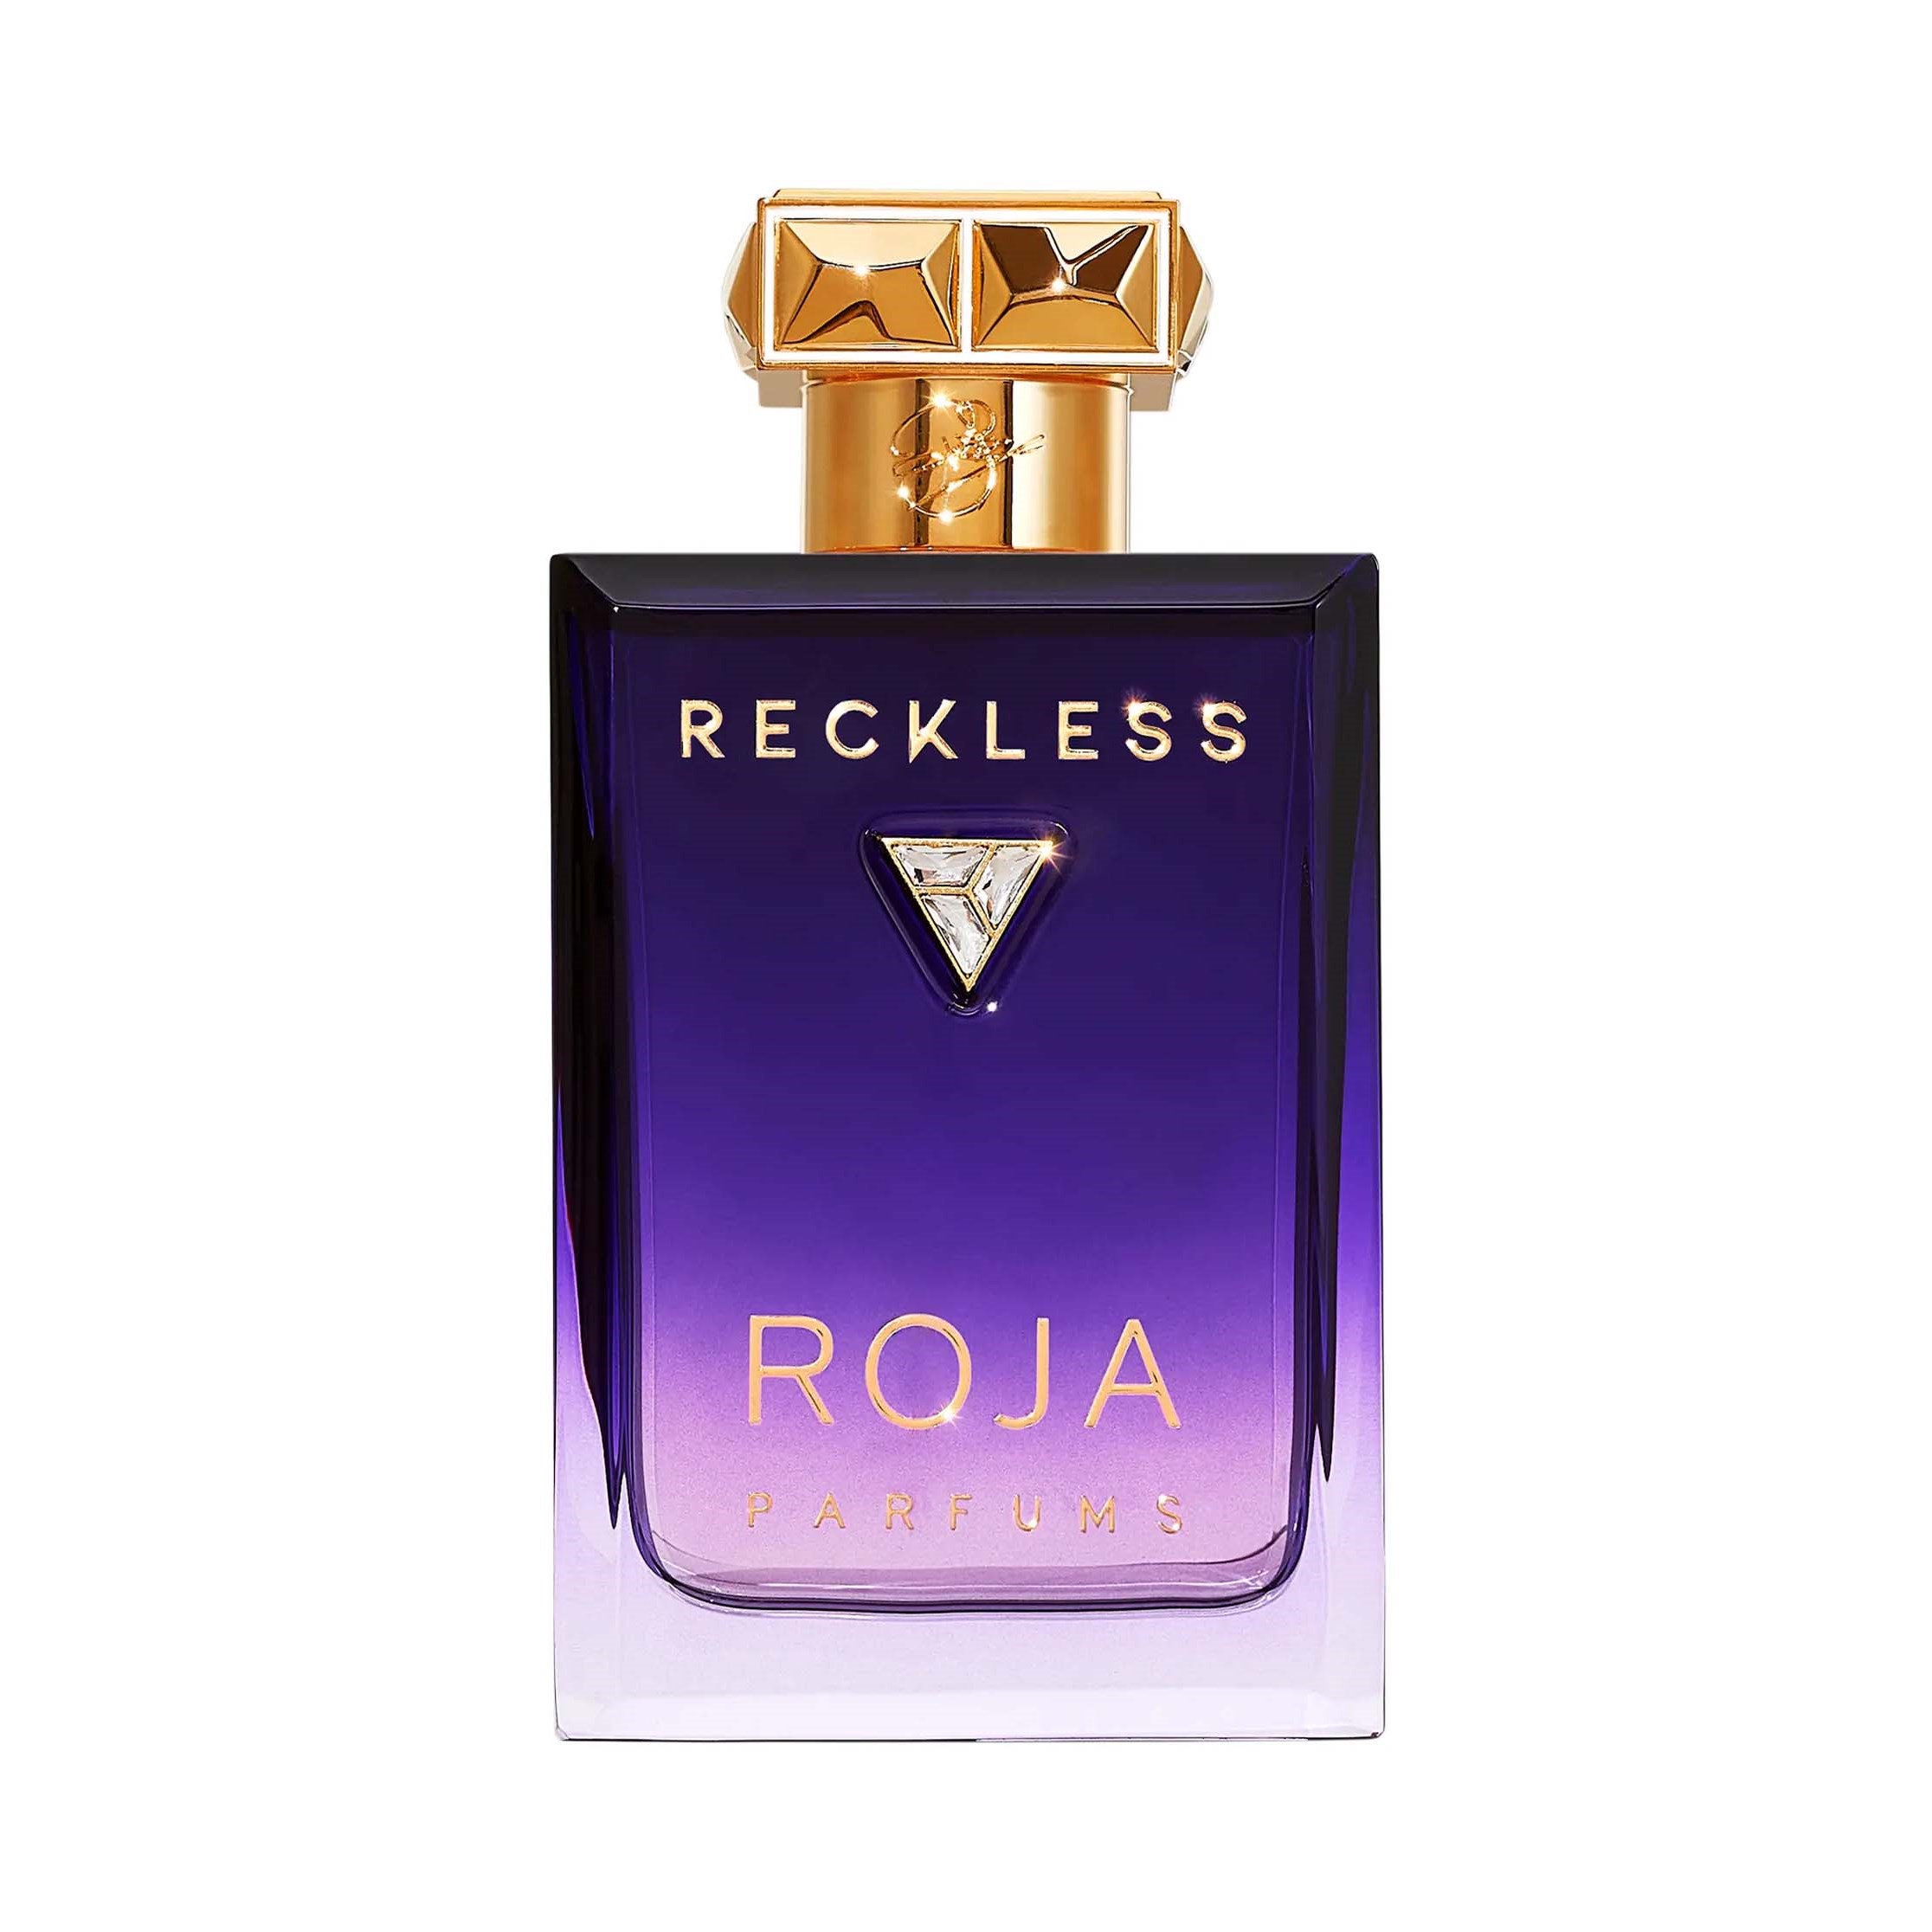 ROJA Reckless Essence De Parfum 100 ml